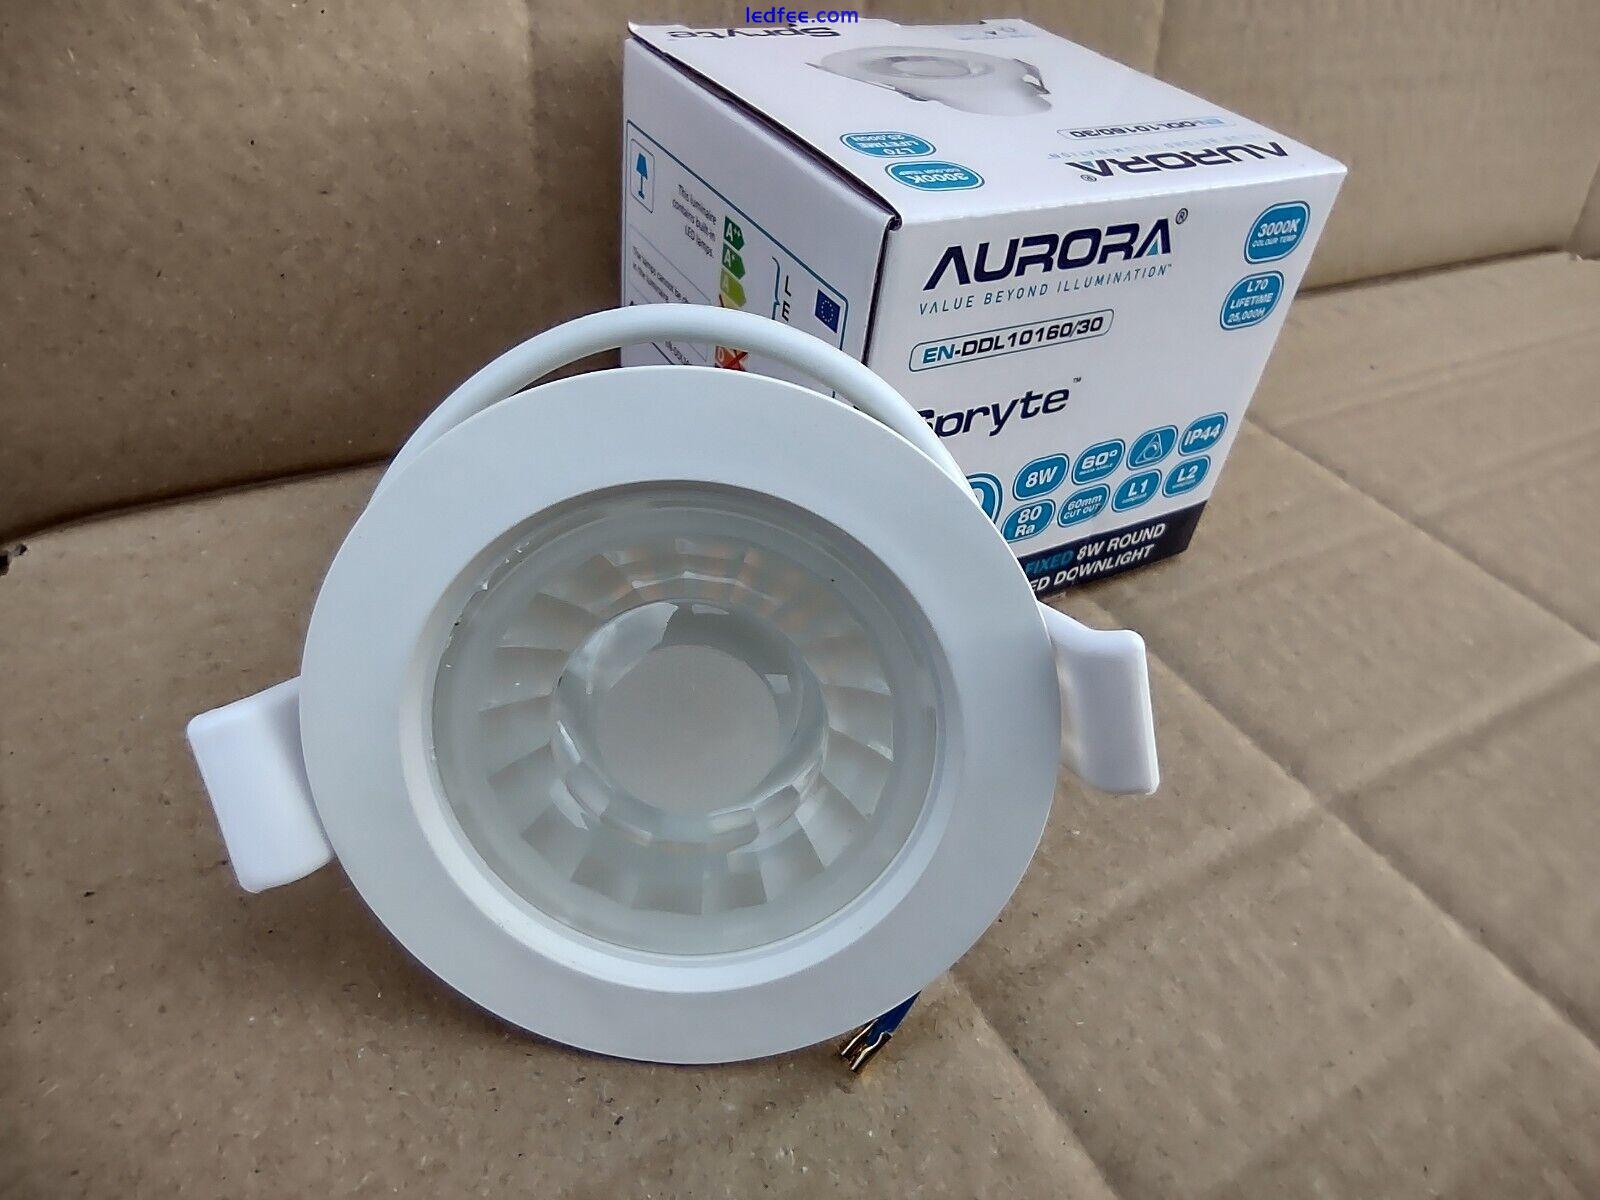 10x Pack Downlight LED 8W Dimmable Warm White Aurora Enlite Spryte 240v Ceiling 0 